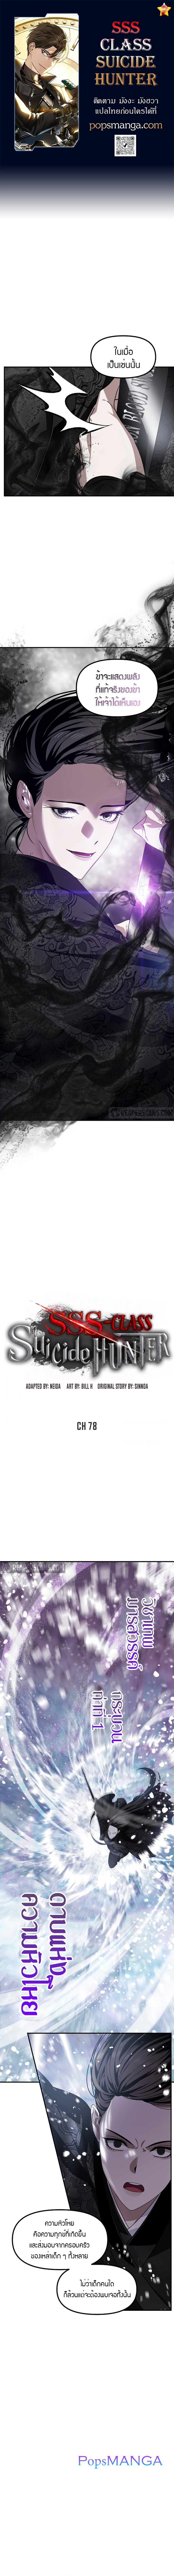 Suicide-Hunter78-1.jpg